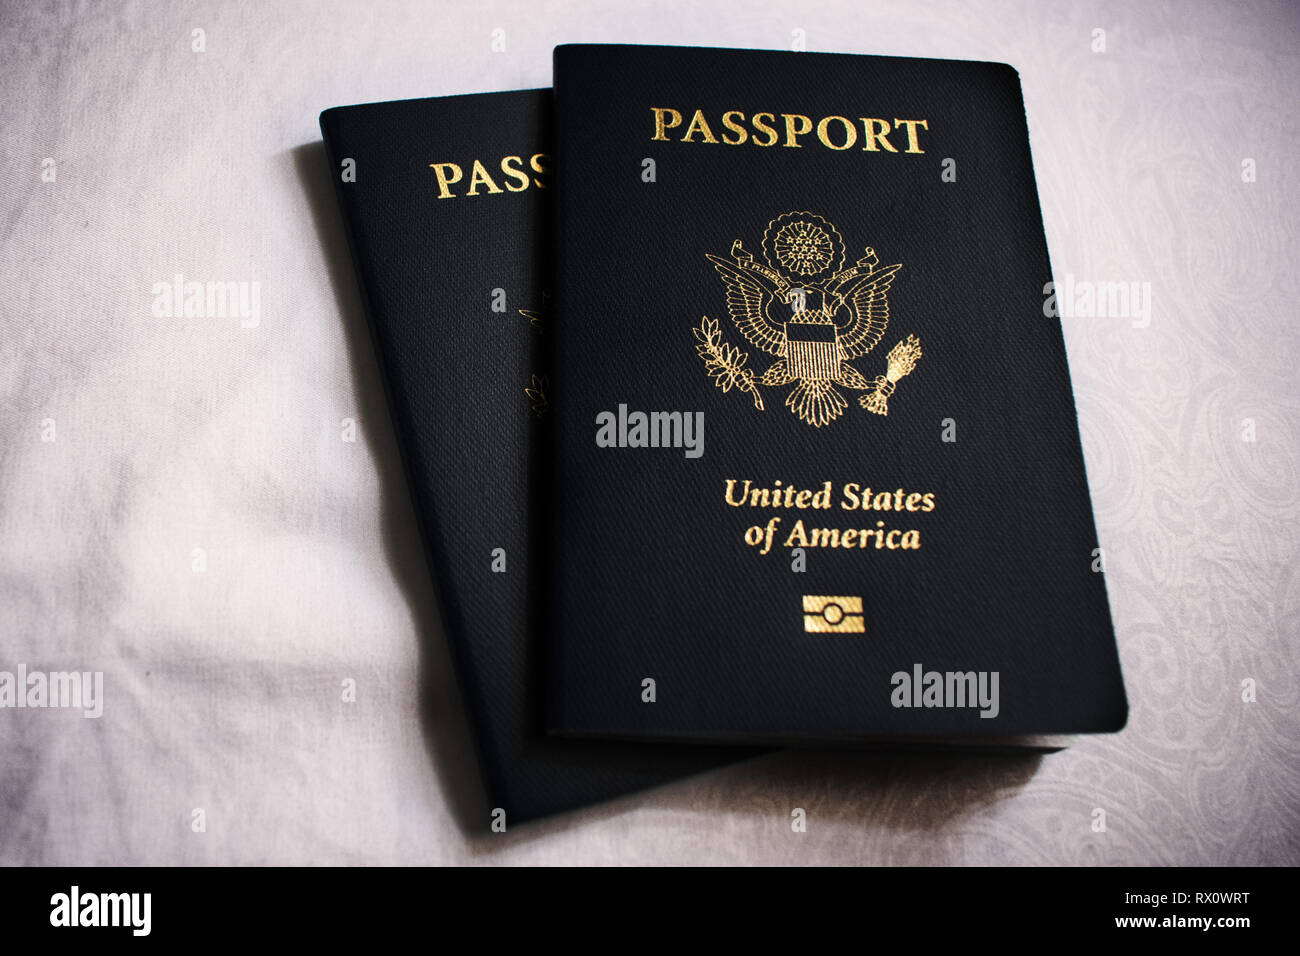 Two US passports on white background Stock Photo